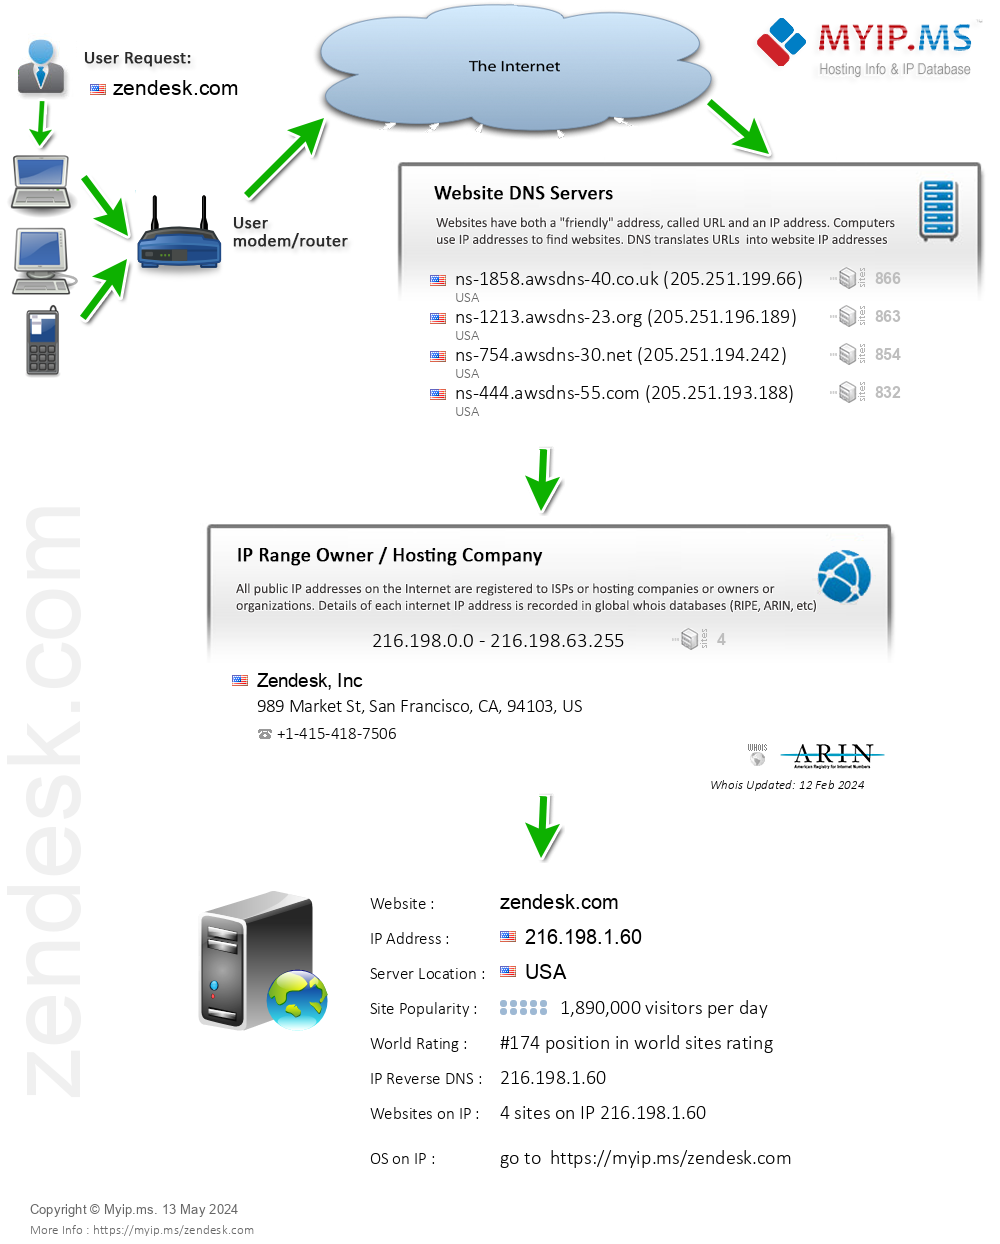 Zendesk.com - Website Hosting Visual IP Diagram